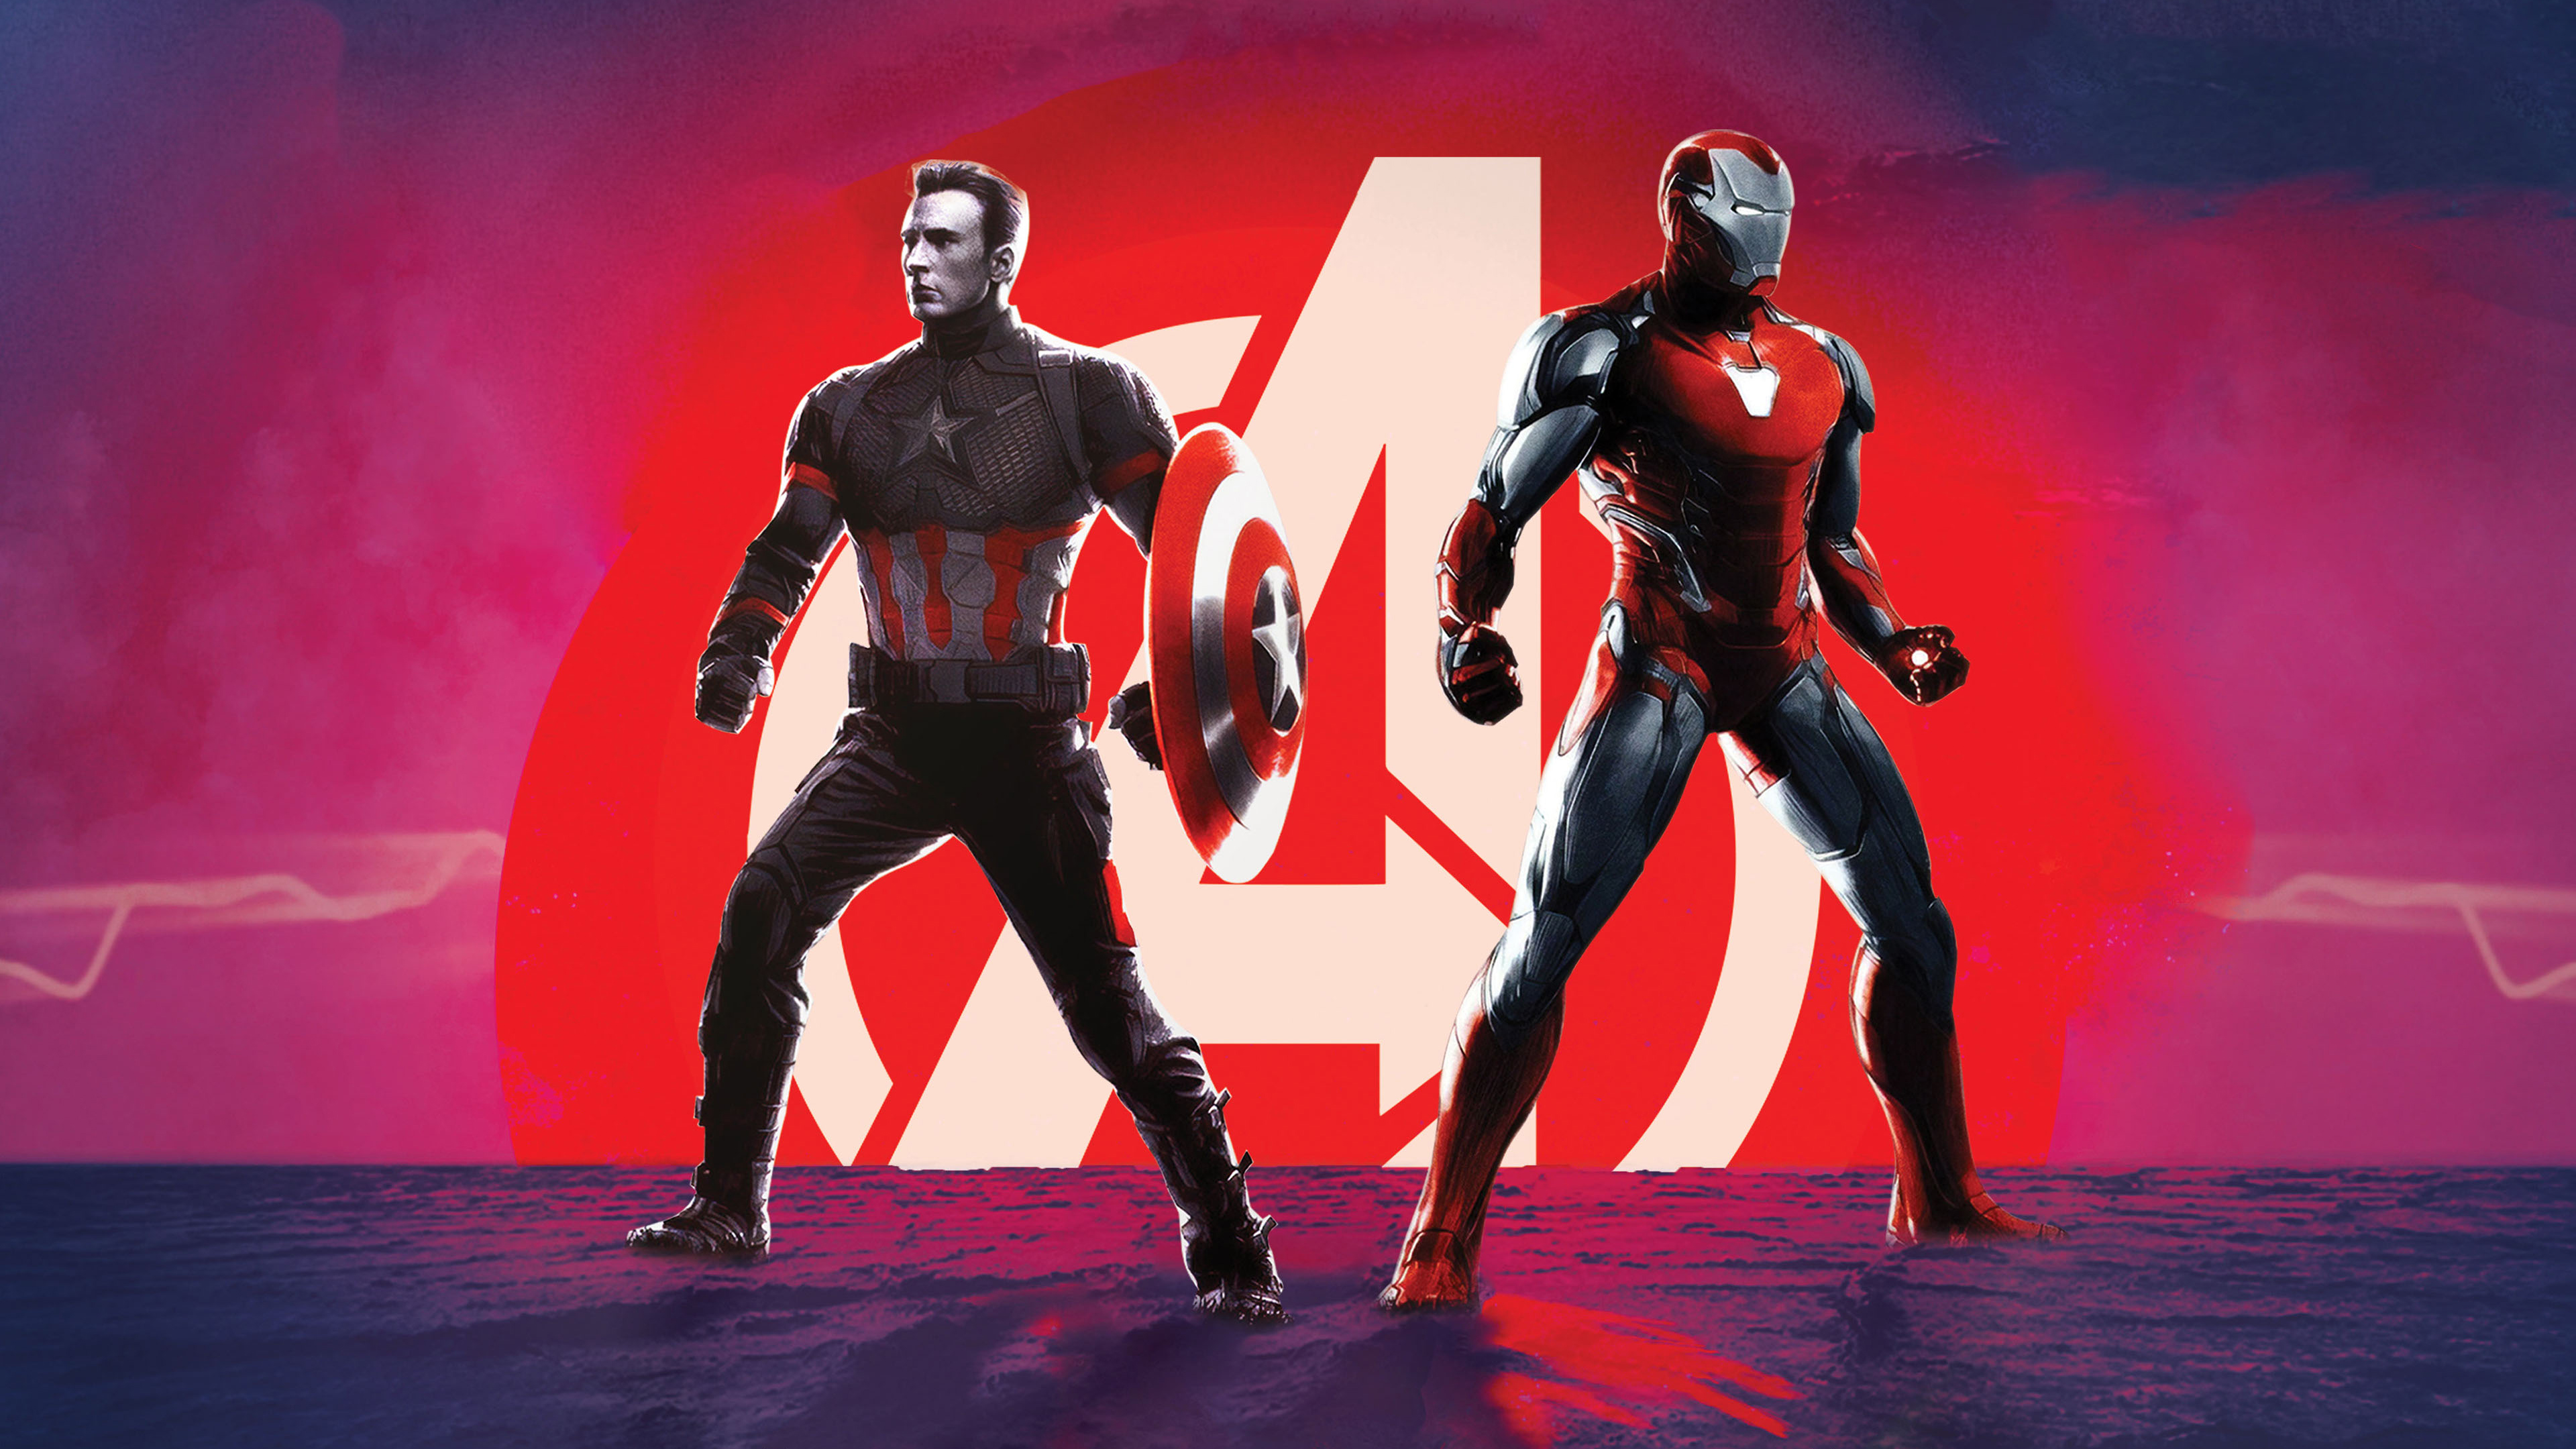 captain america iron man in avengers endgame 4k wallpaper › Live Wallpapers  or Animated Wallpapers Videos - Images | DesktopHut